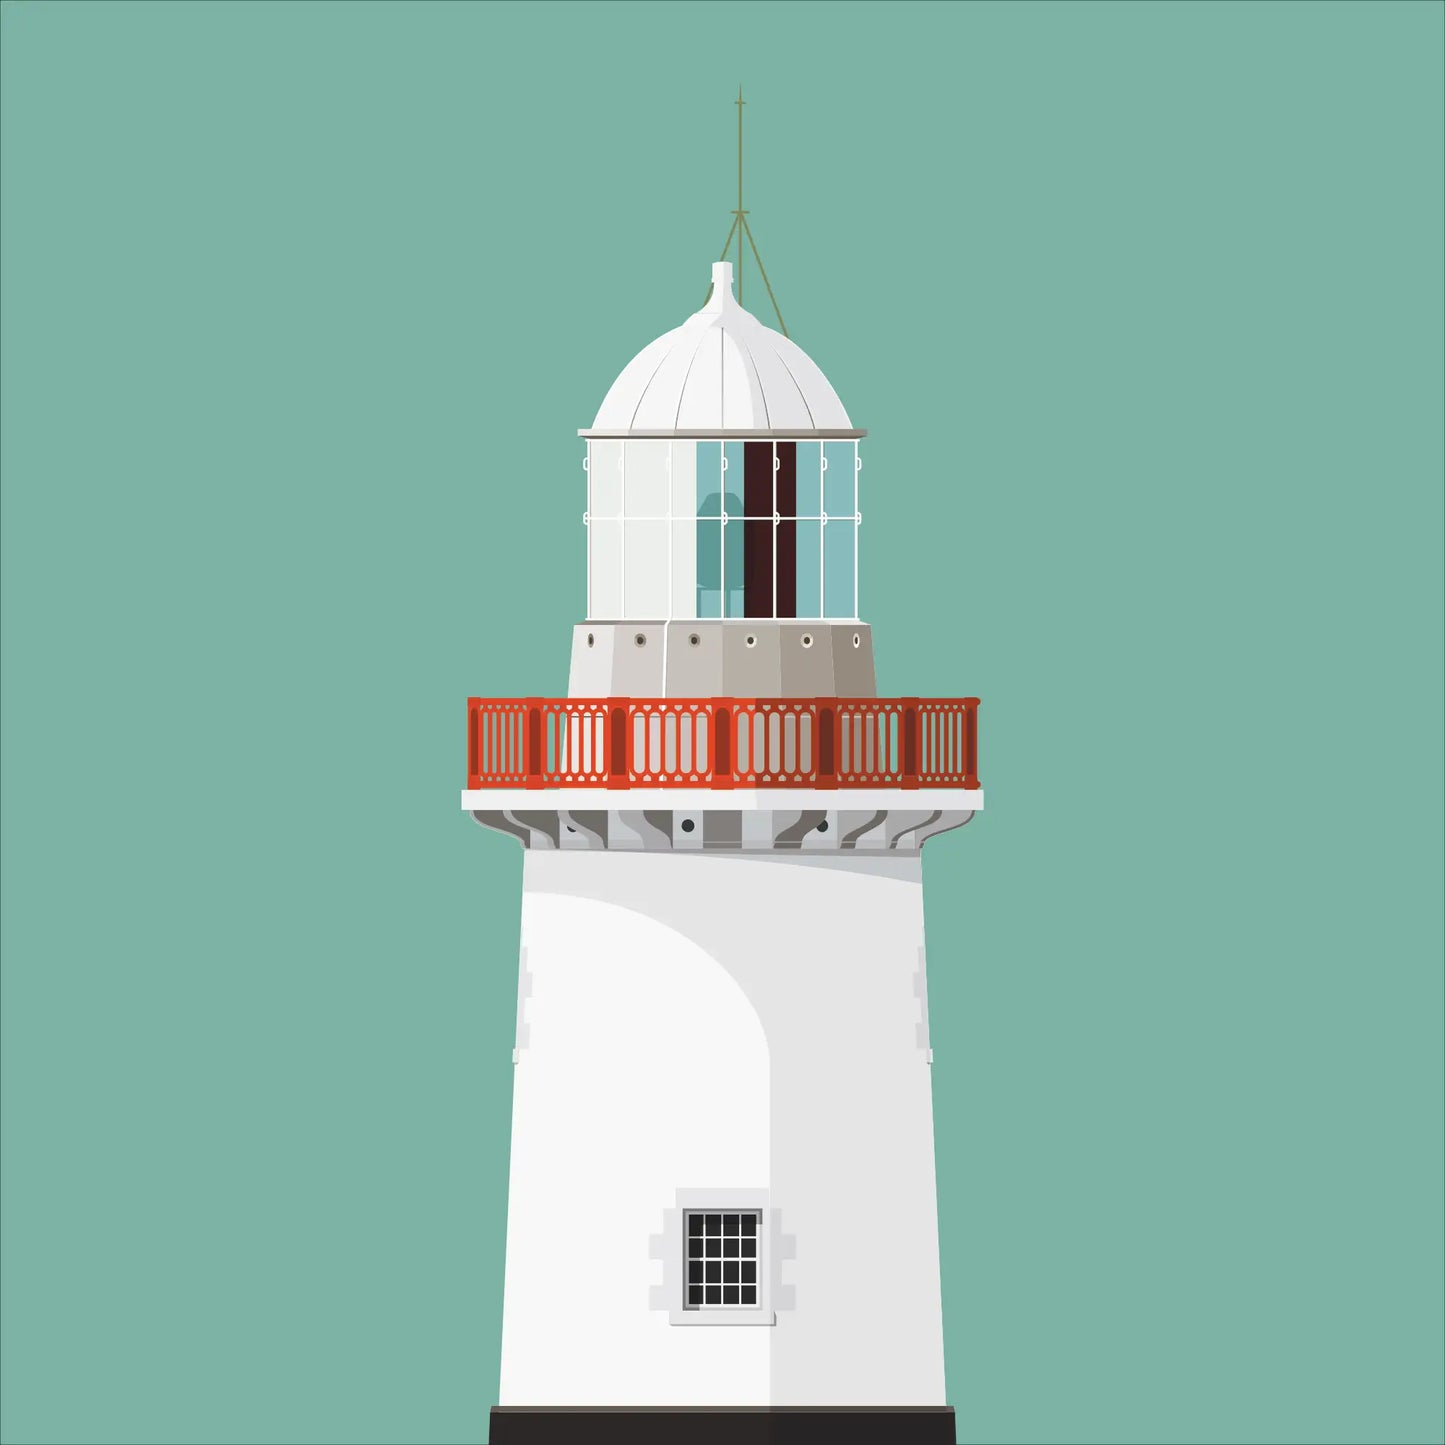 Illustration of Ballinacourty lighthouse on a white background inside light blue square.